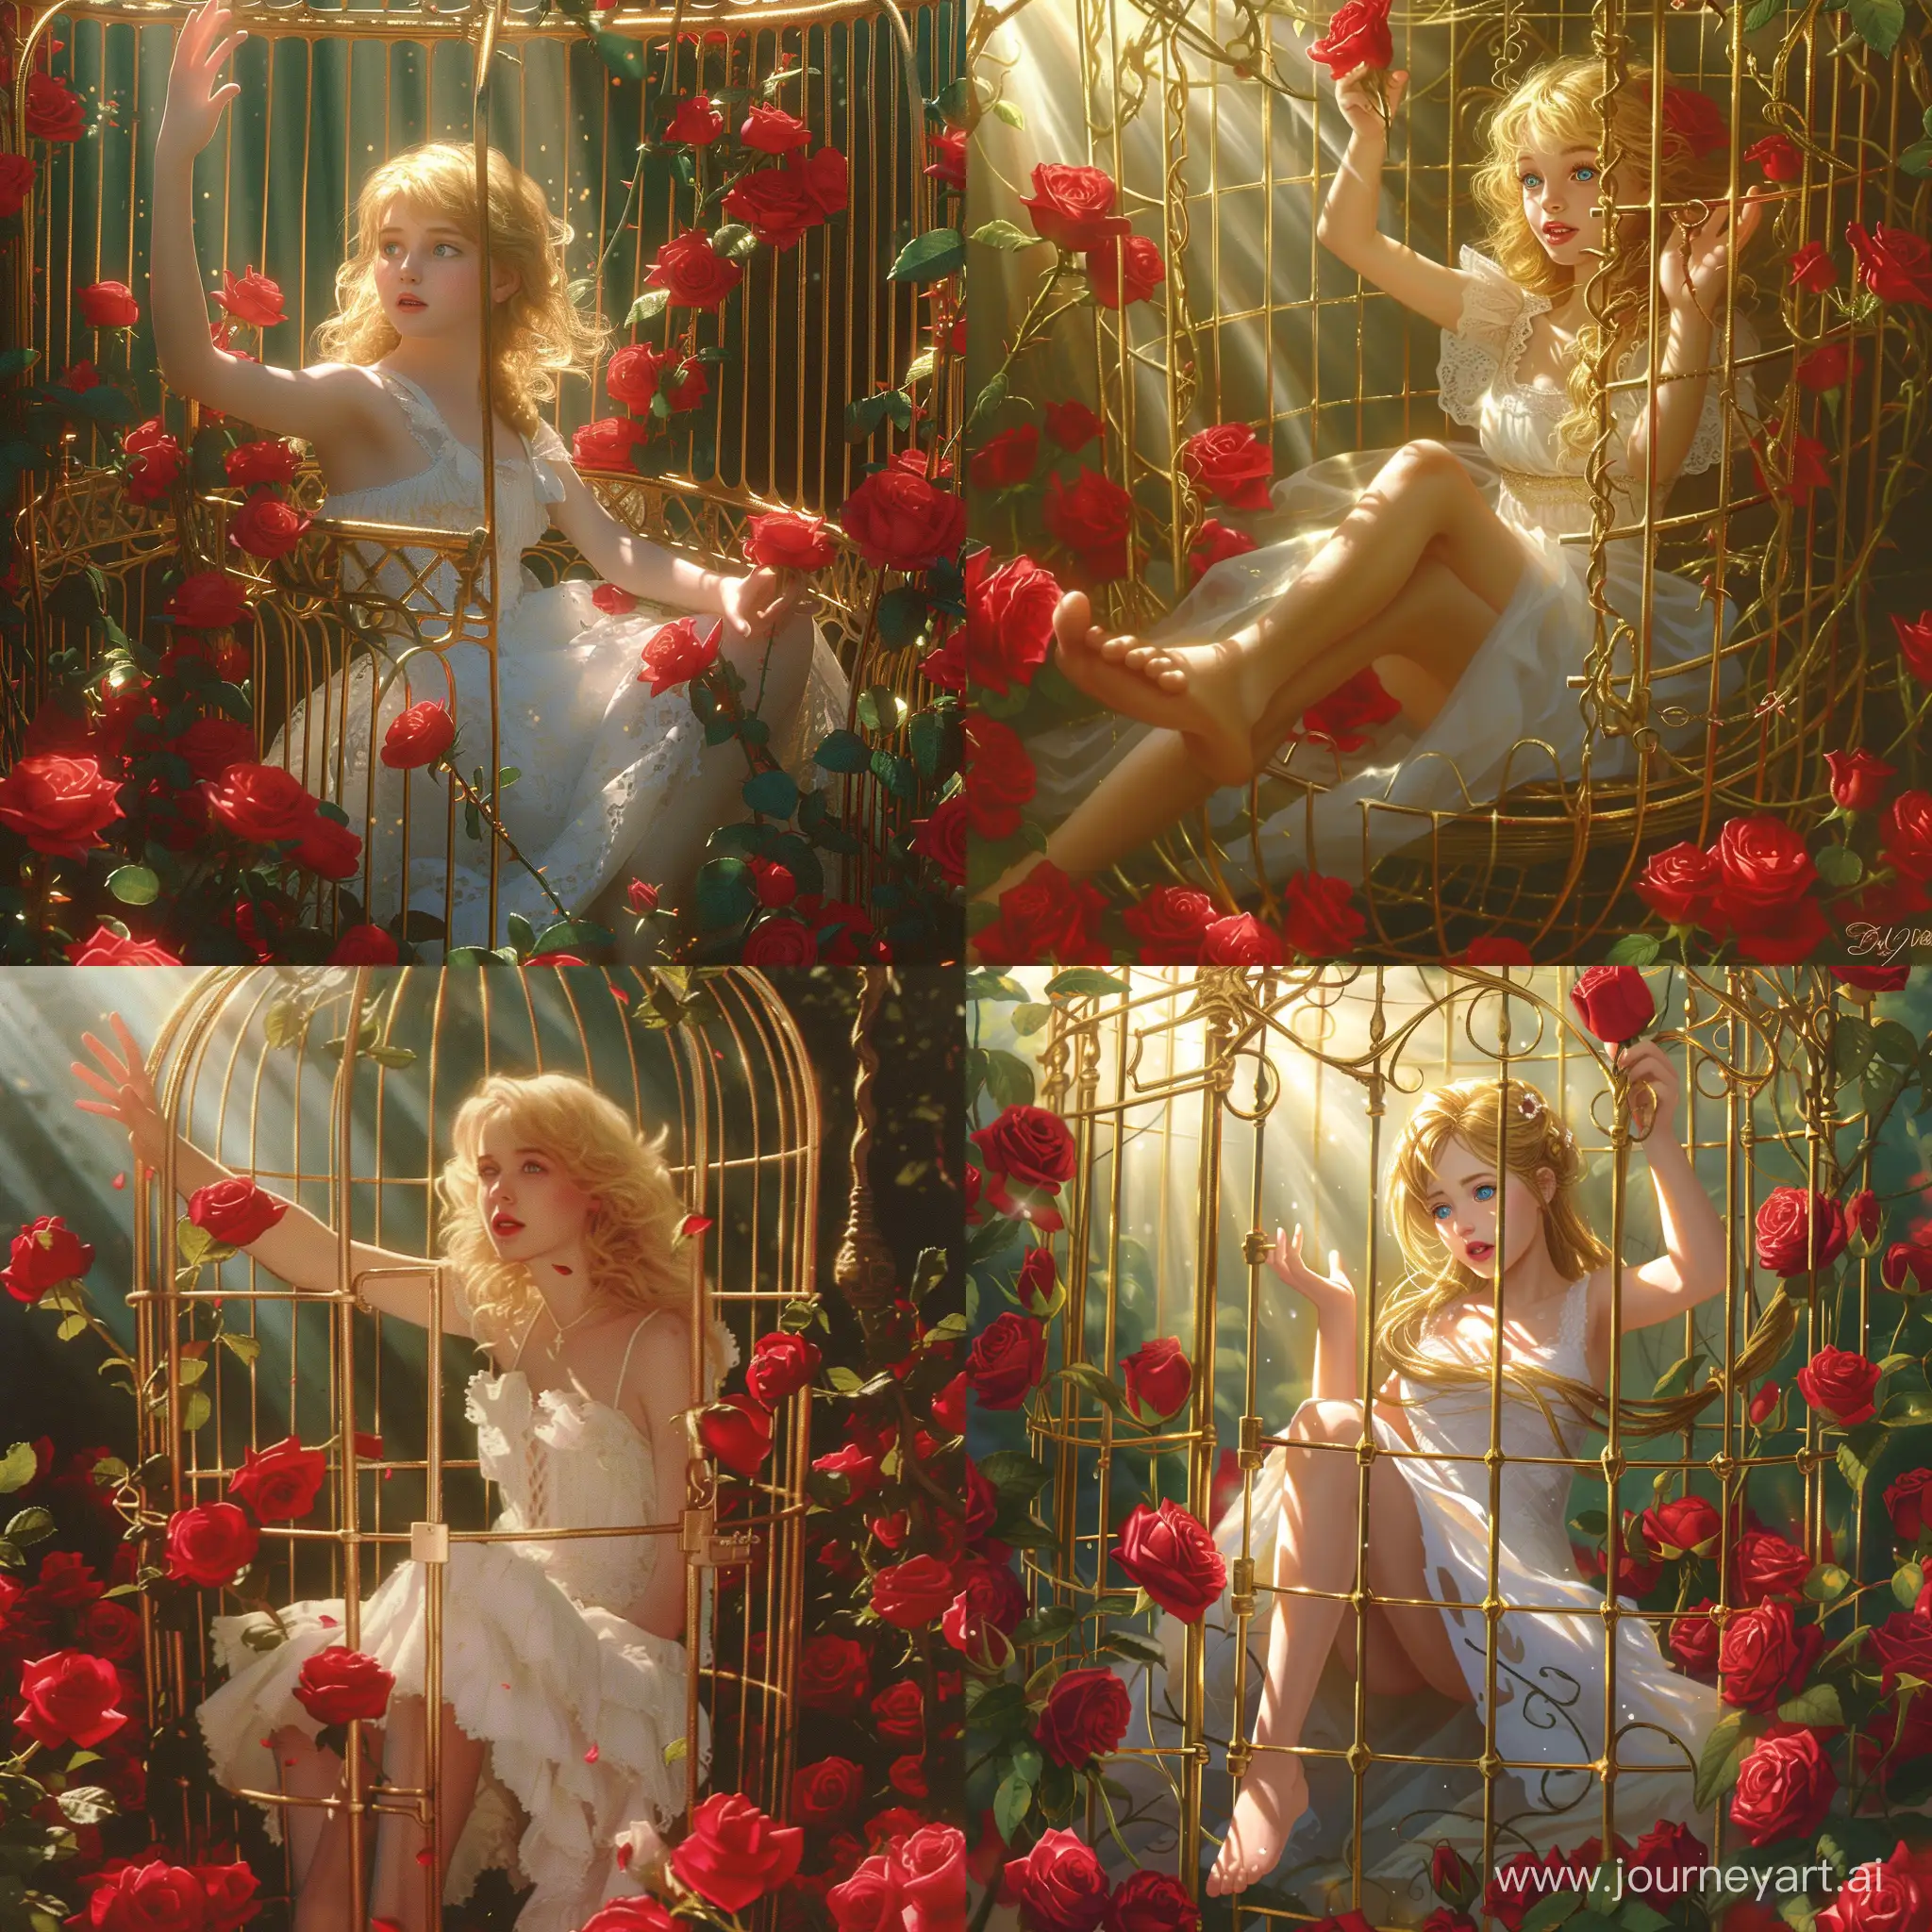 GoldenHaired-Girl-in-White-Dress-Sitting-in-RoseFilled-Cage-Reaching-for-Sunlight